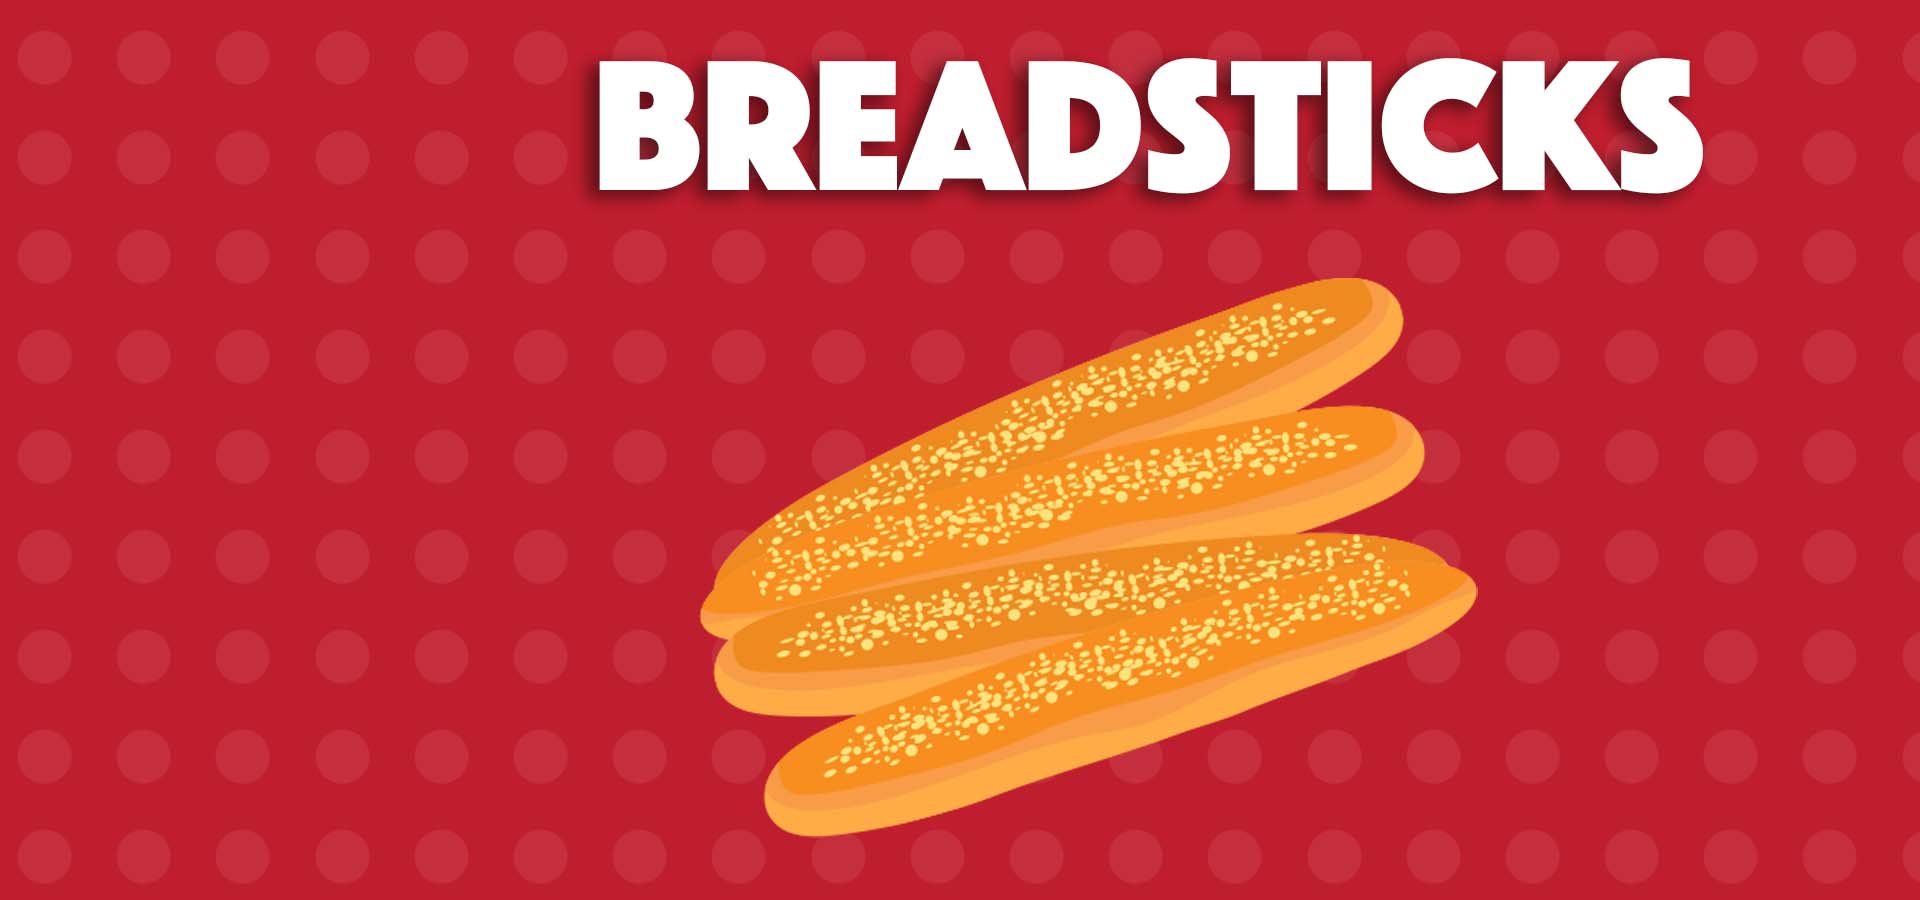 Buy 1 Breadstick GET 1 FREE